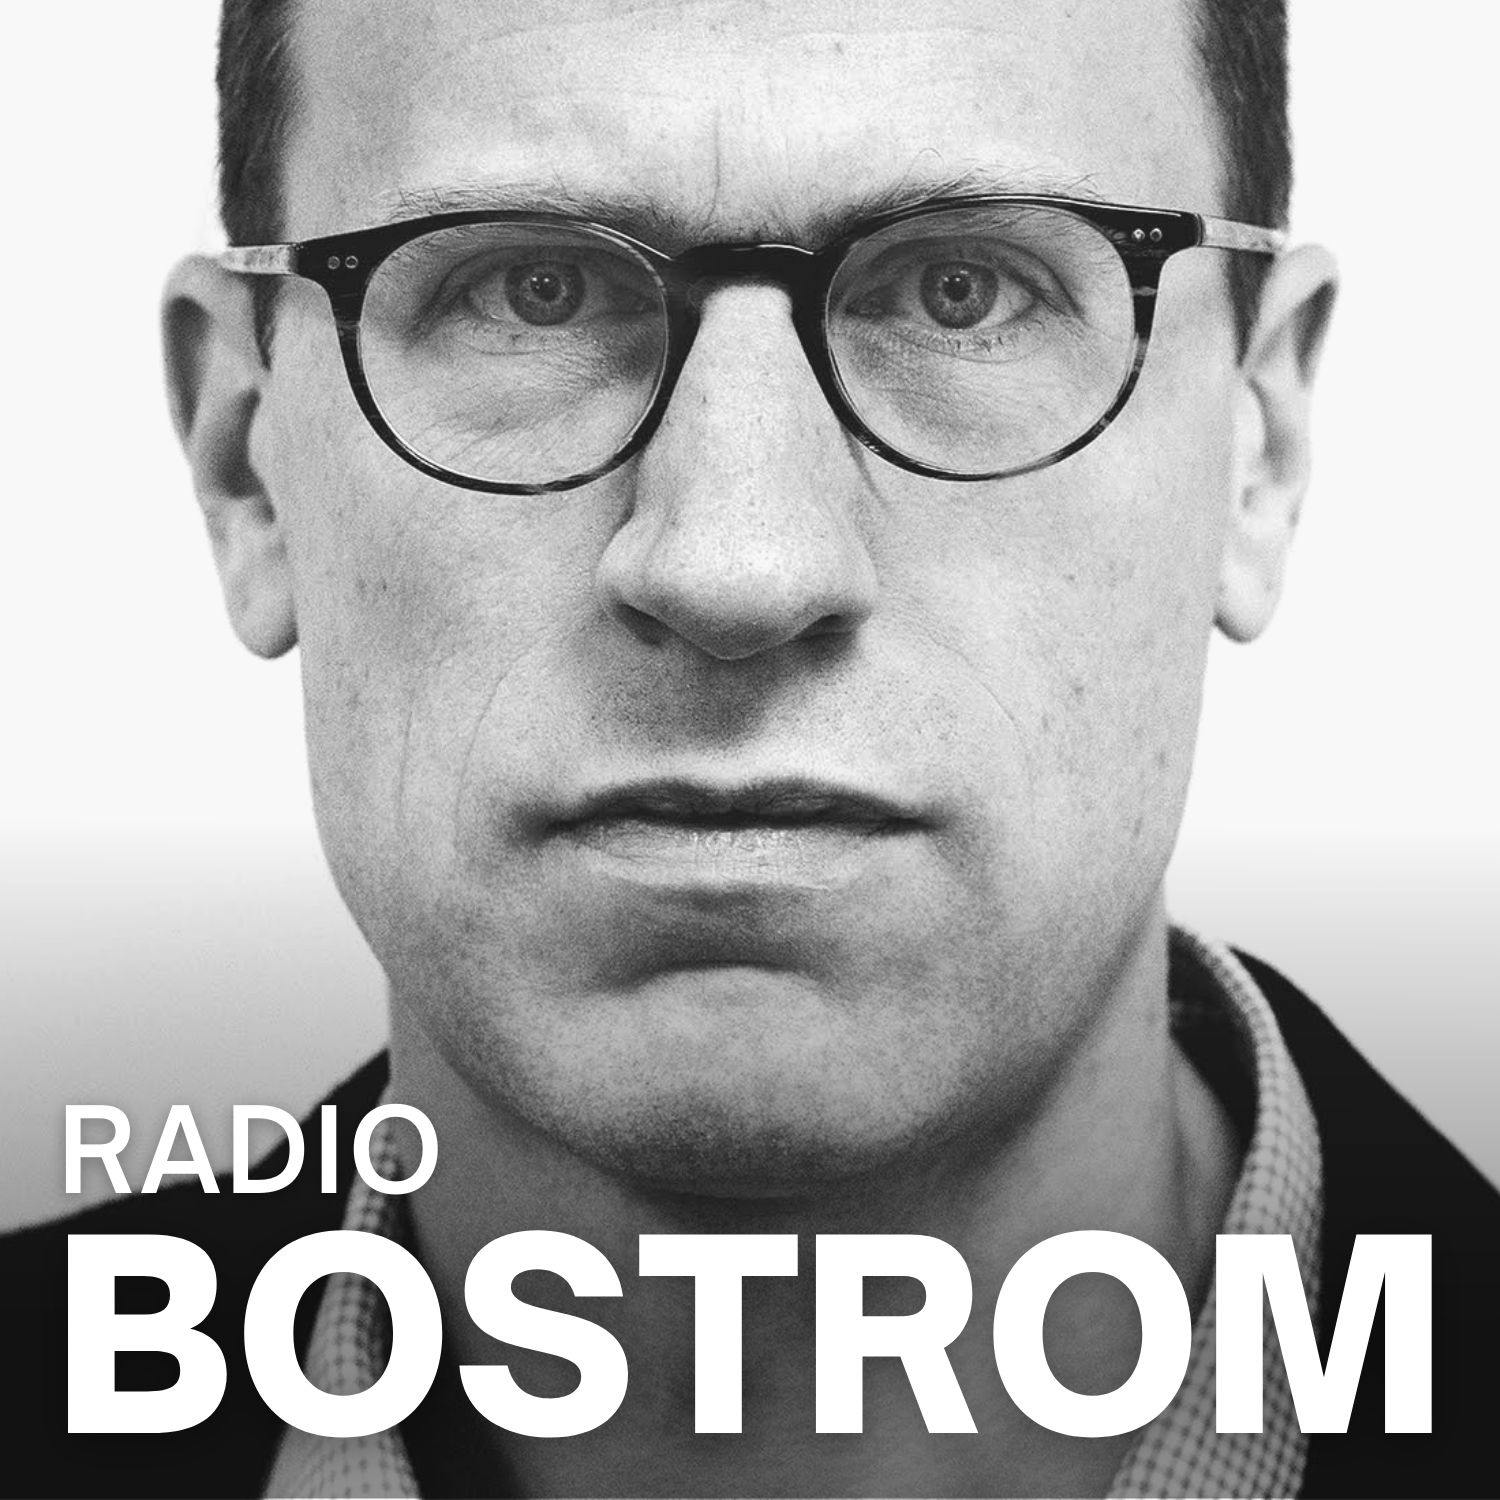 Radio Bostrom cover image